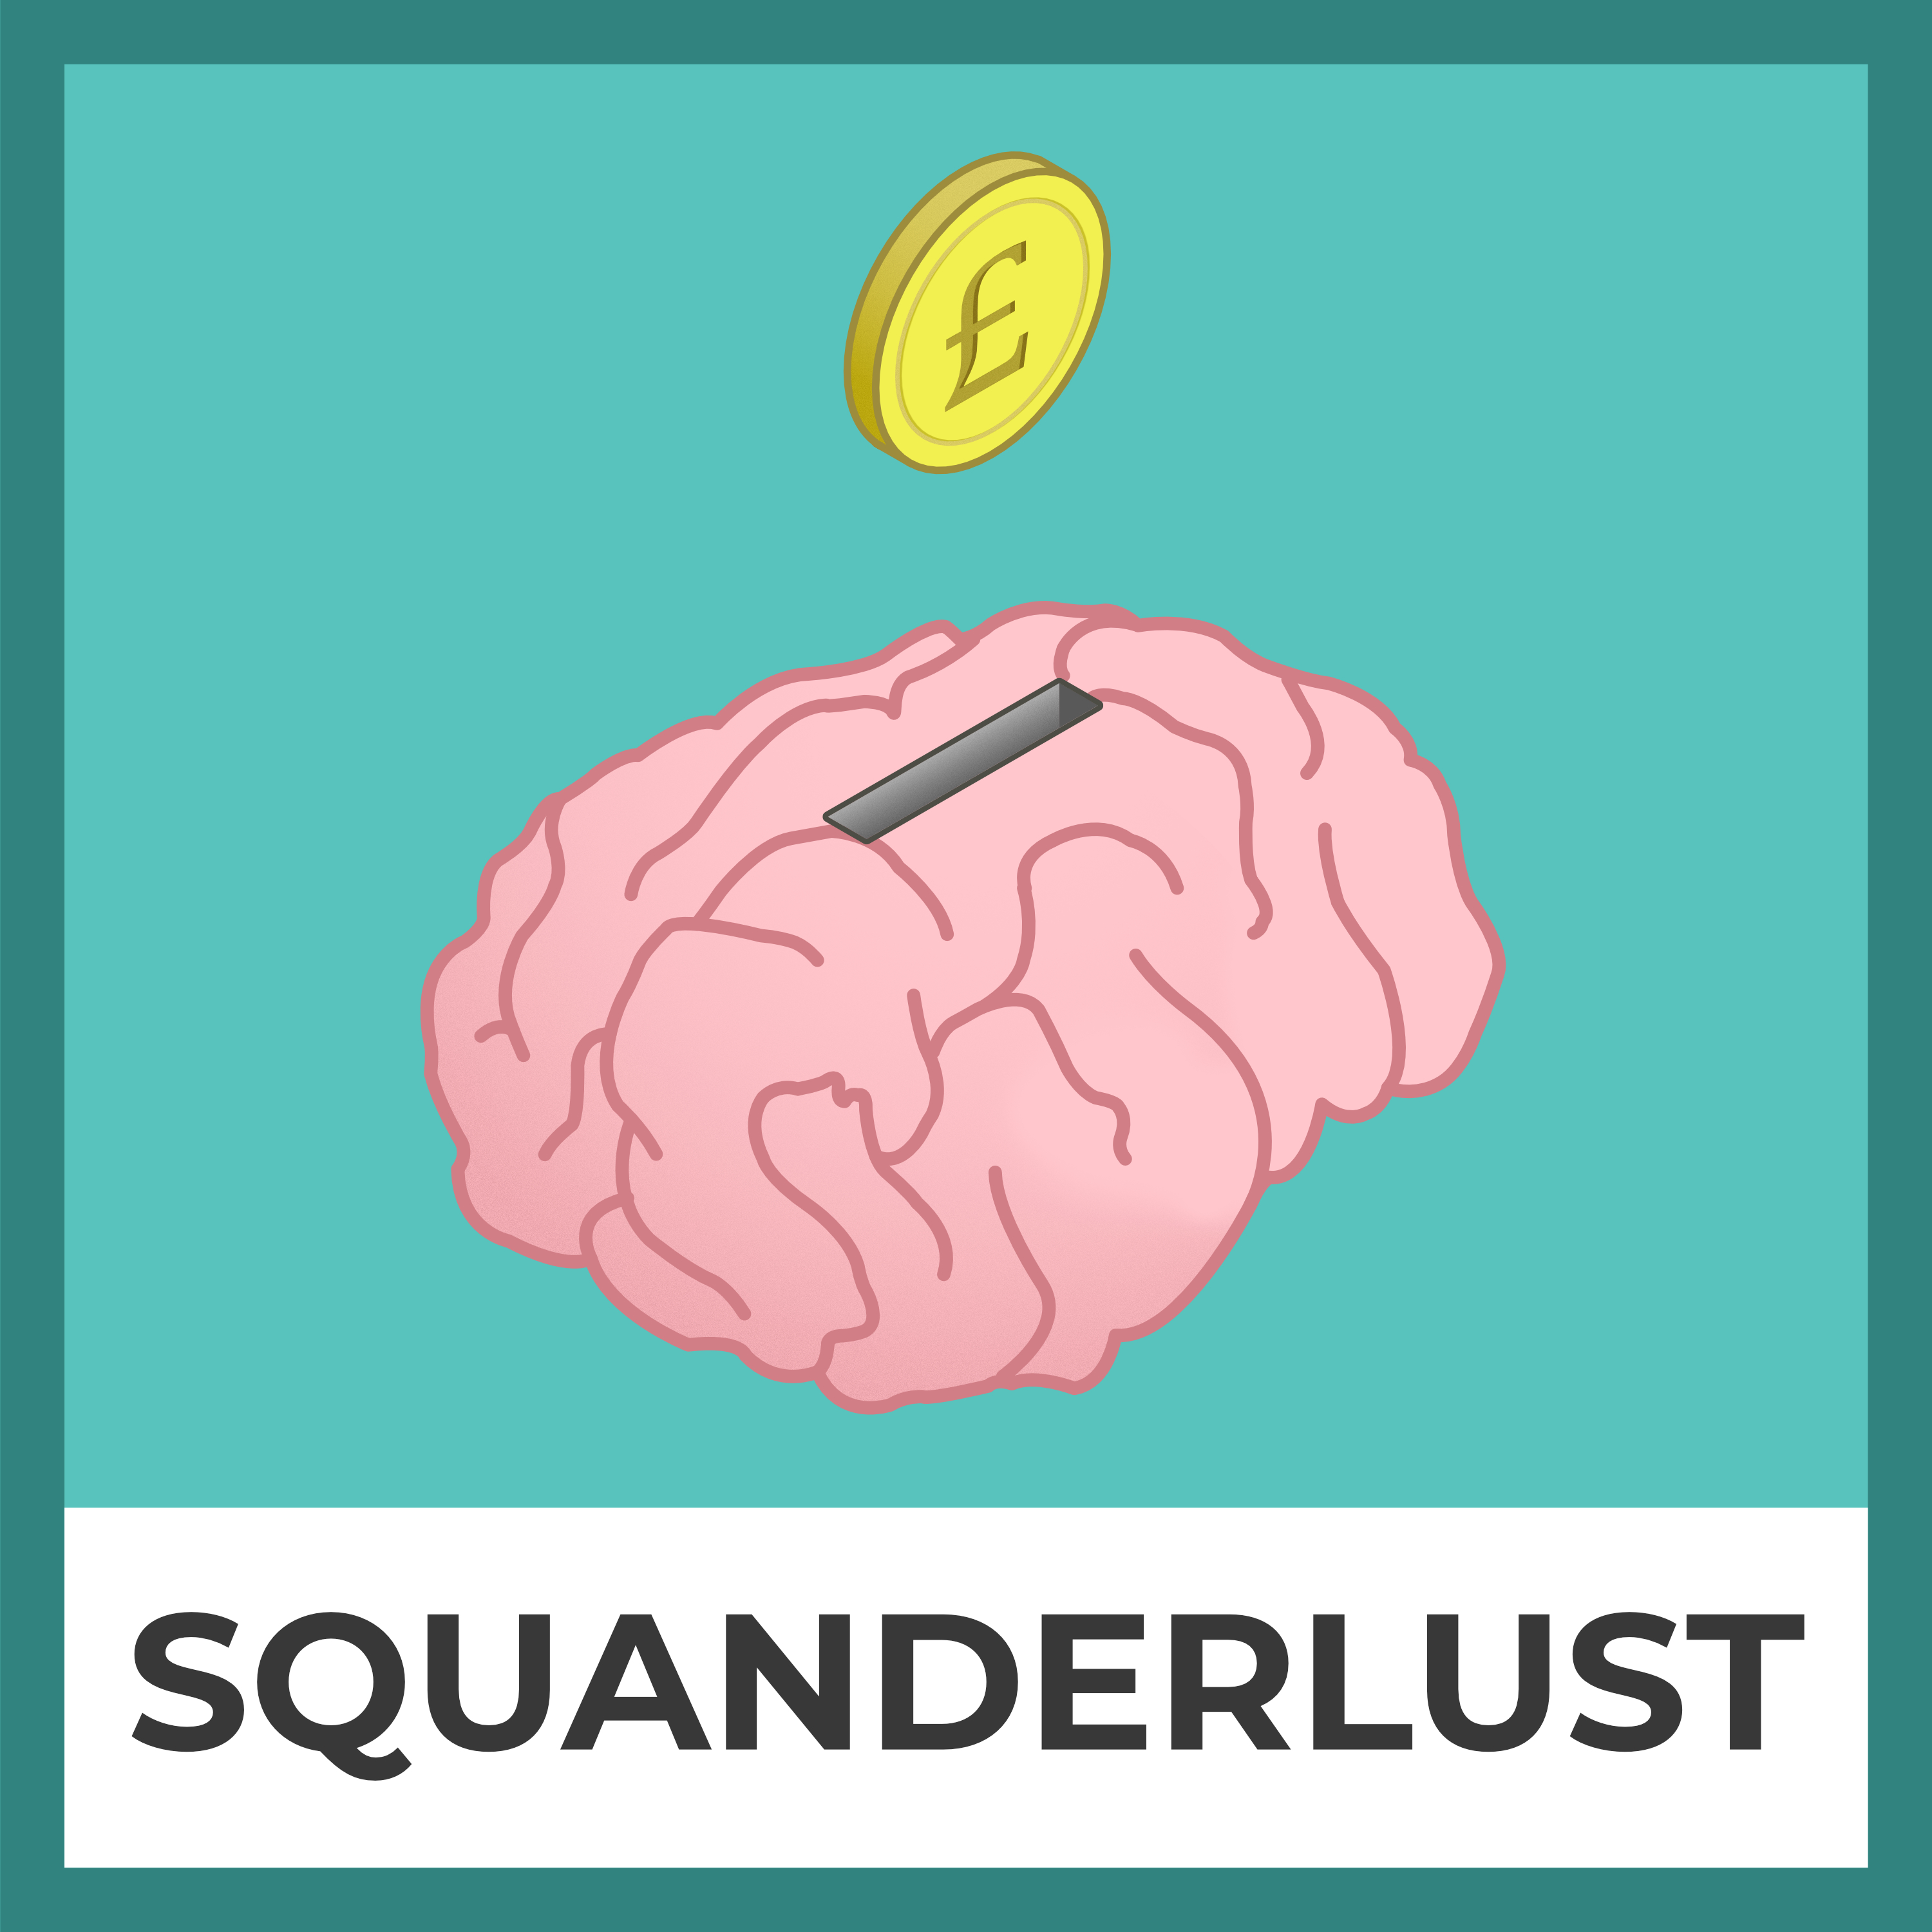 Squanderlust JPEG logo 3 (3000 x 3000px).jpg